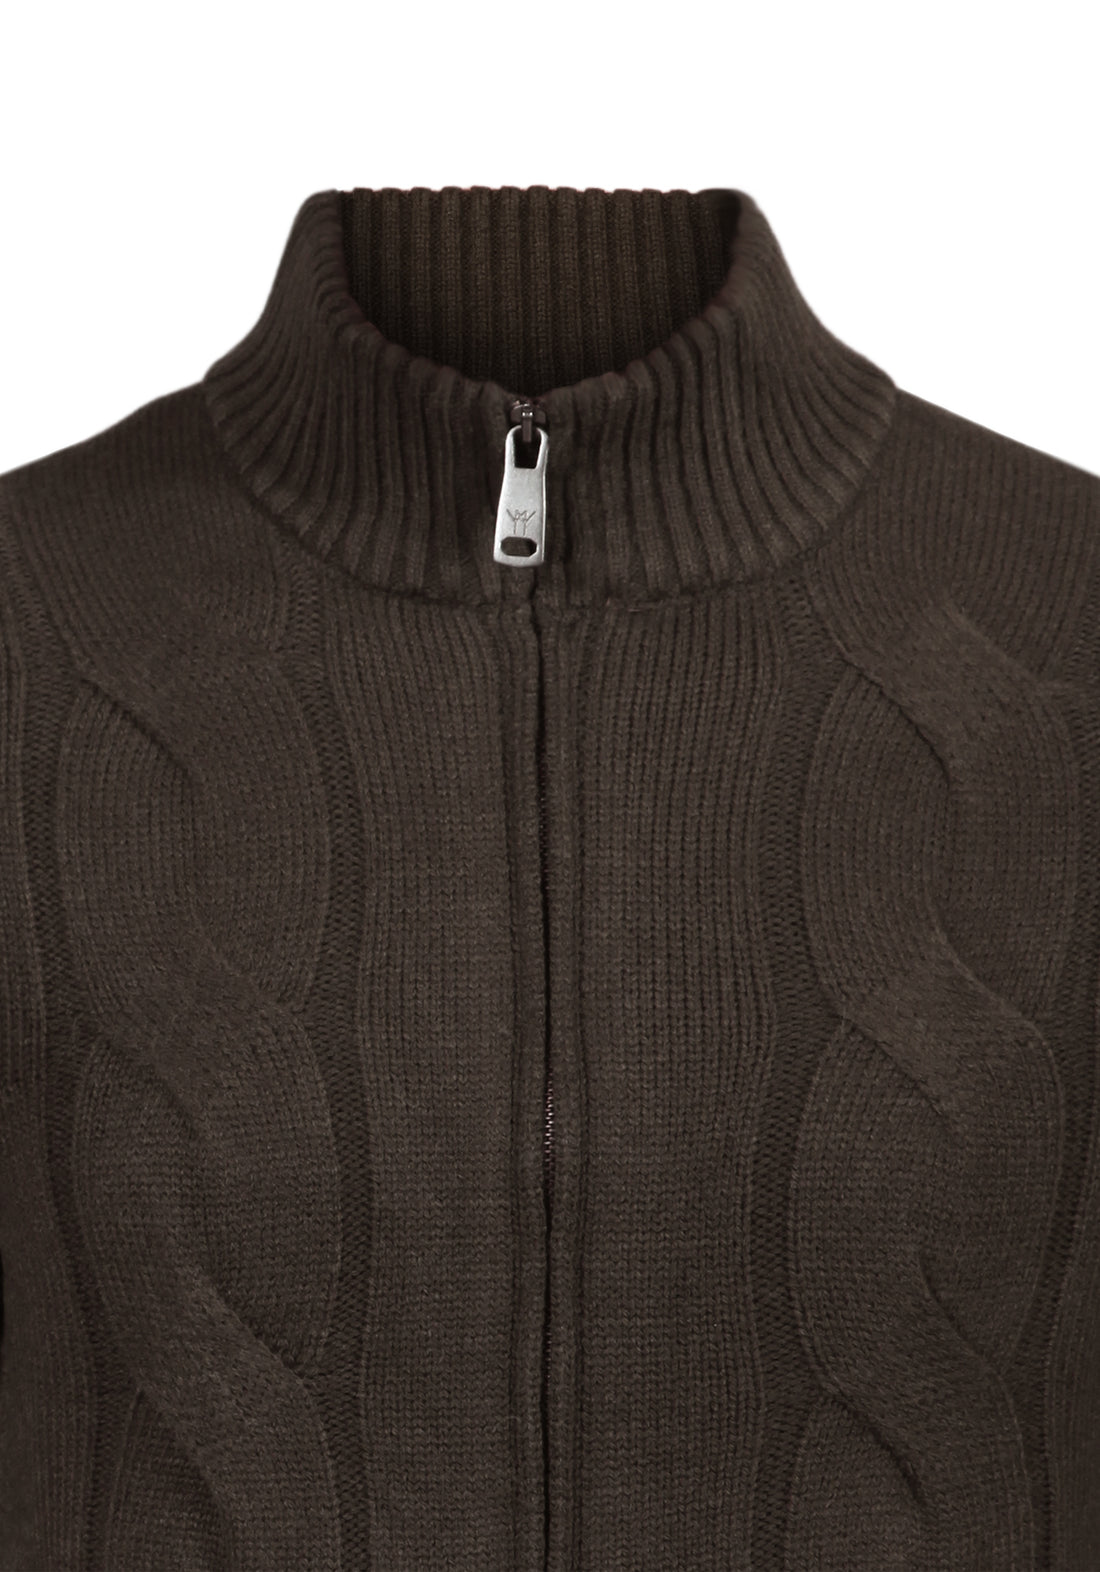 Treccia sweater with internal fur - Moro